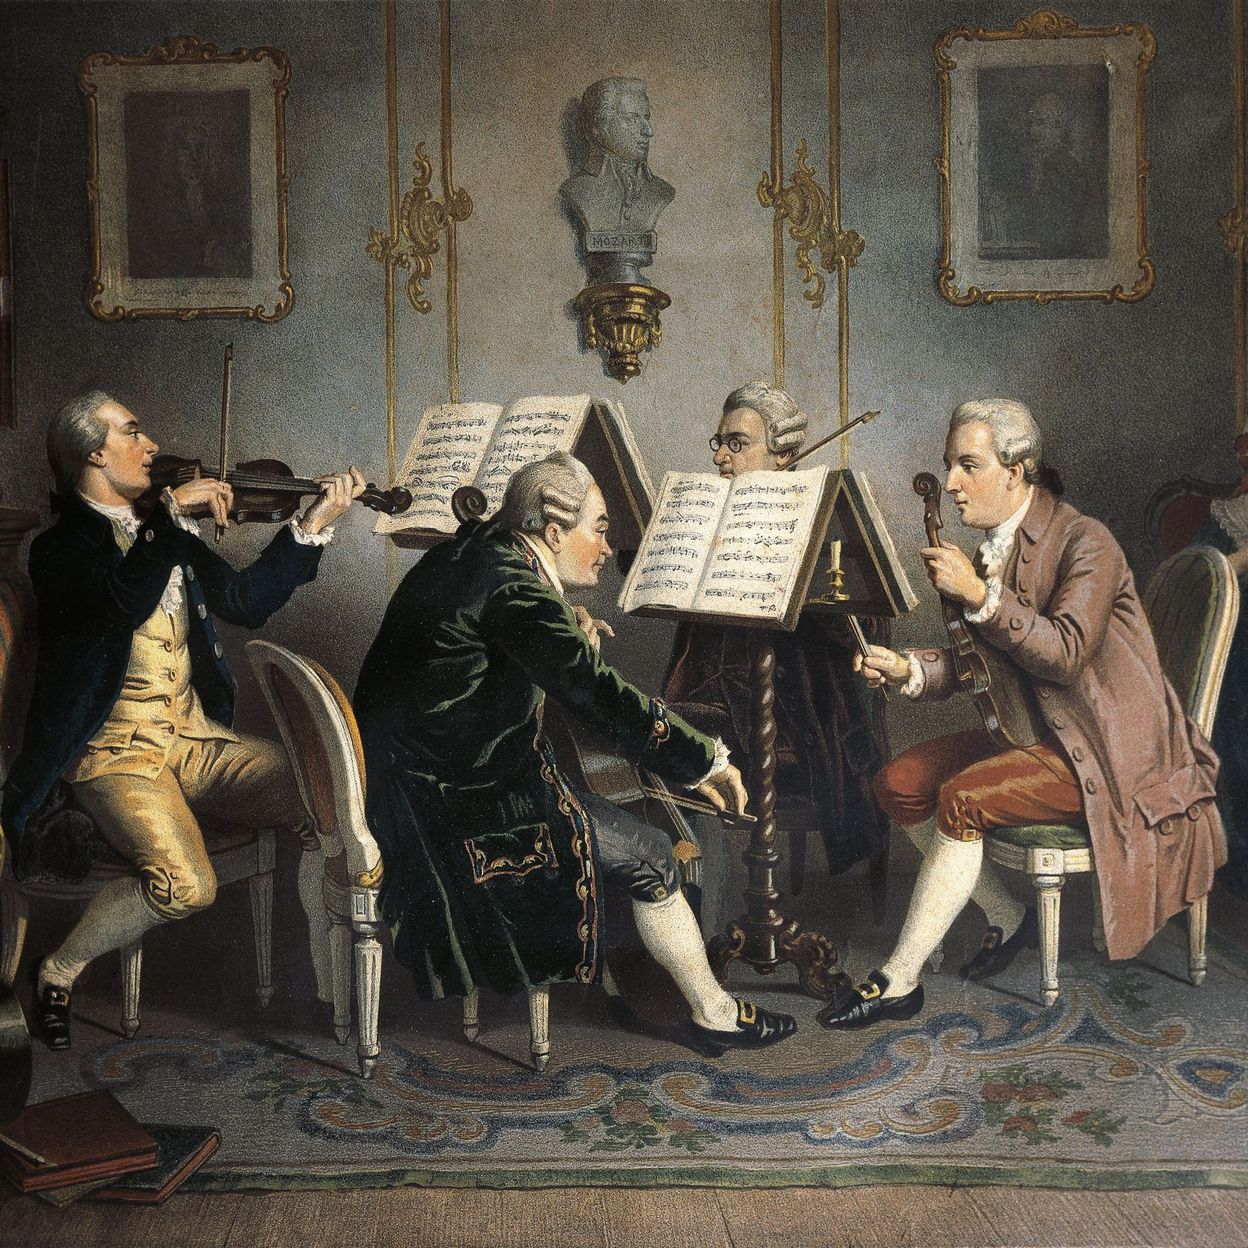 Гайдн фортепиано слушать. Гайдн Йозеф квартет. Гайдн эпоха классицизма. Живопись 19 века музыканты струнный квартет. Йозеф Гайдн и Моцарт.